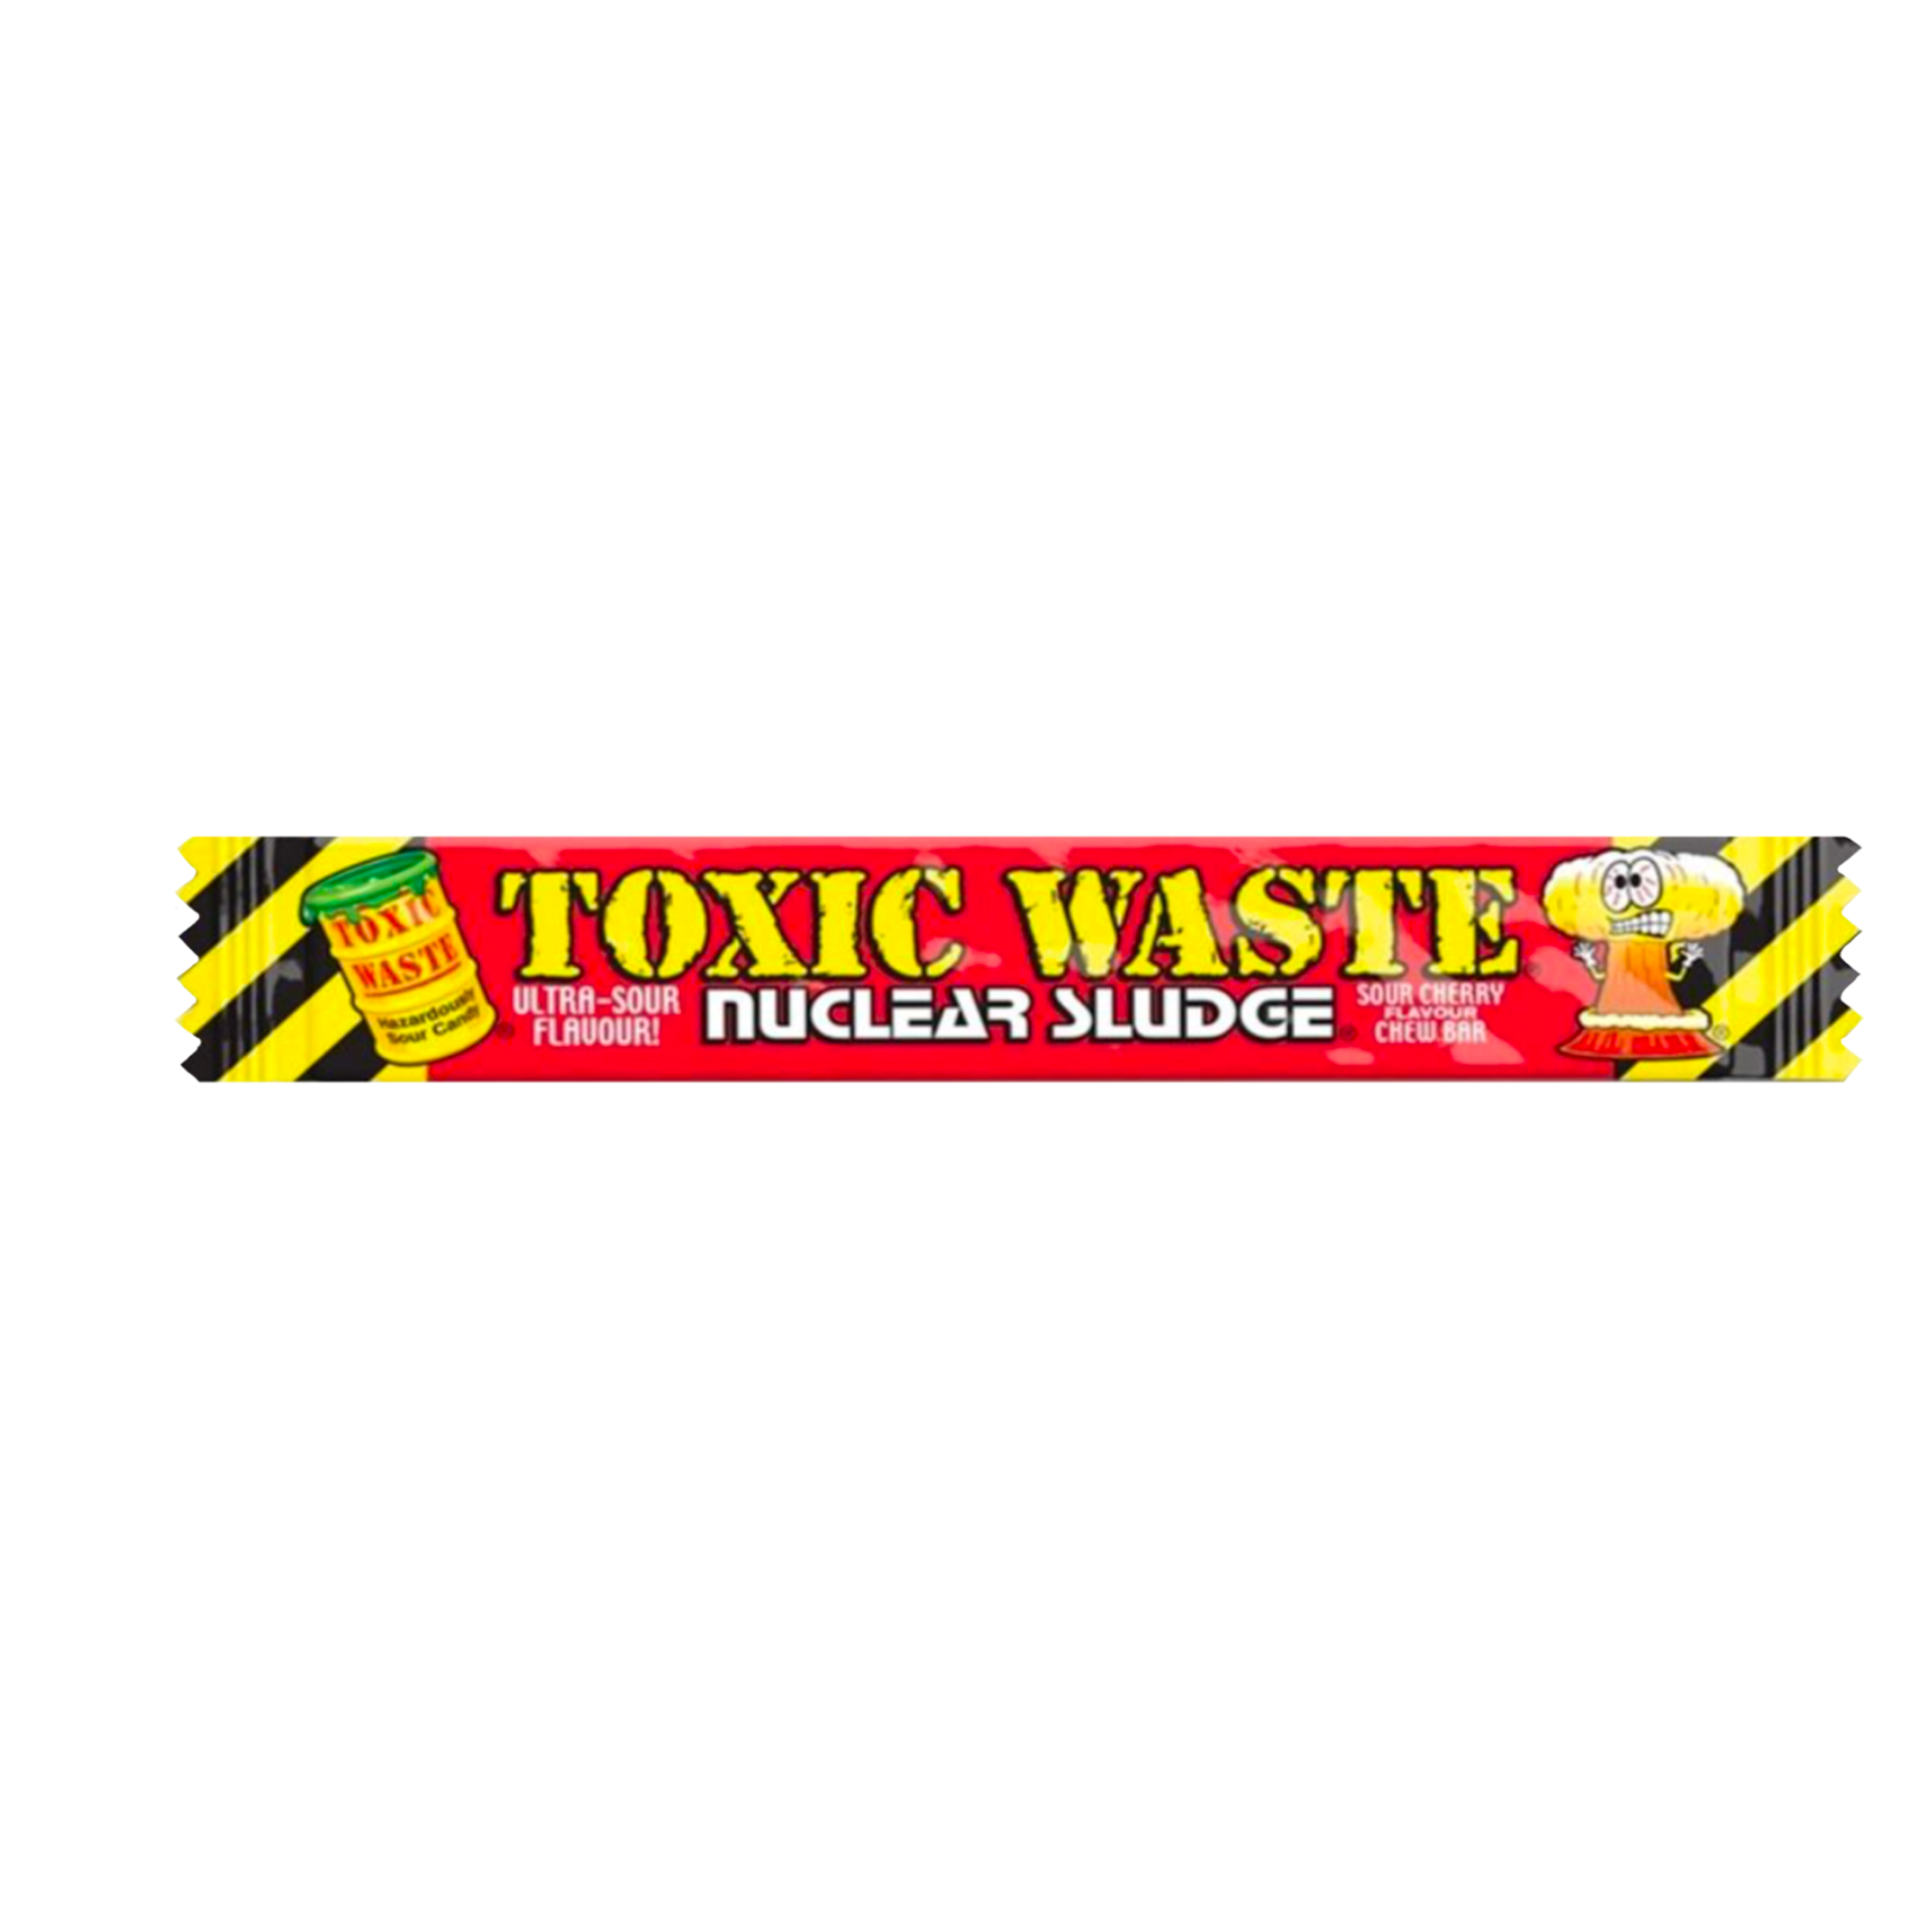 Toxic waste zure kers